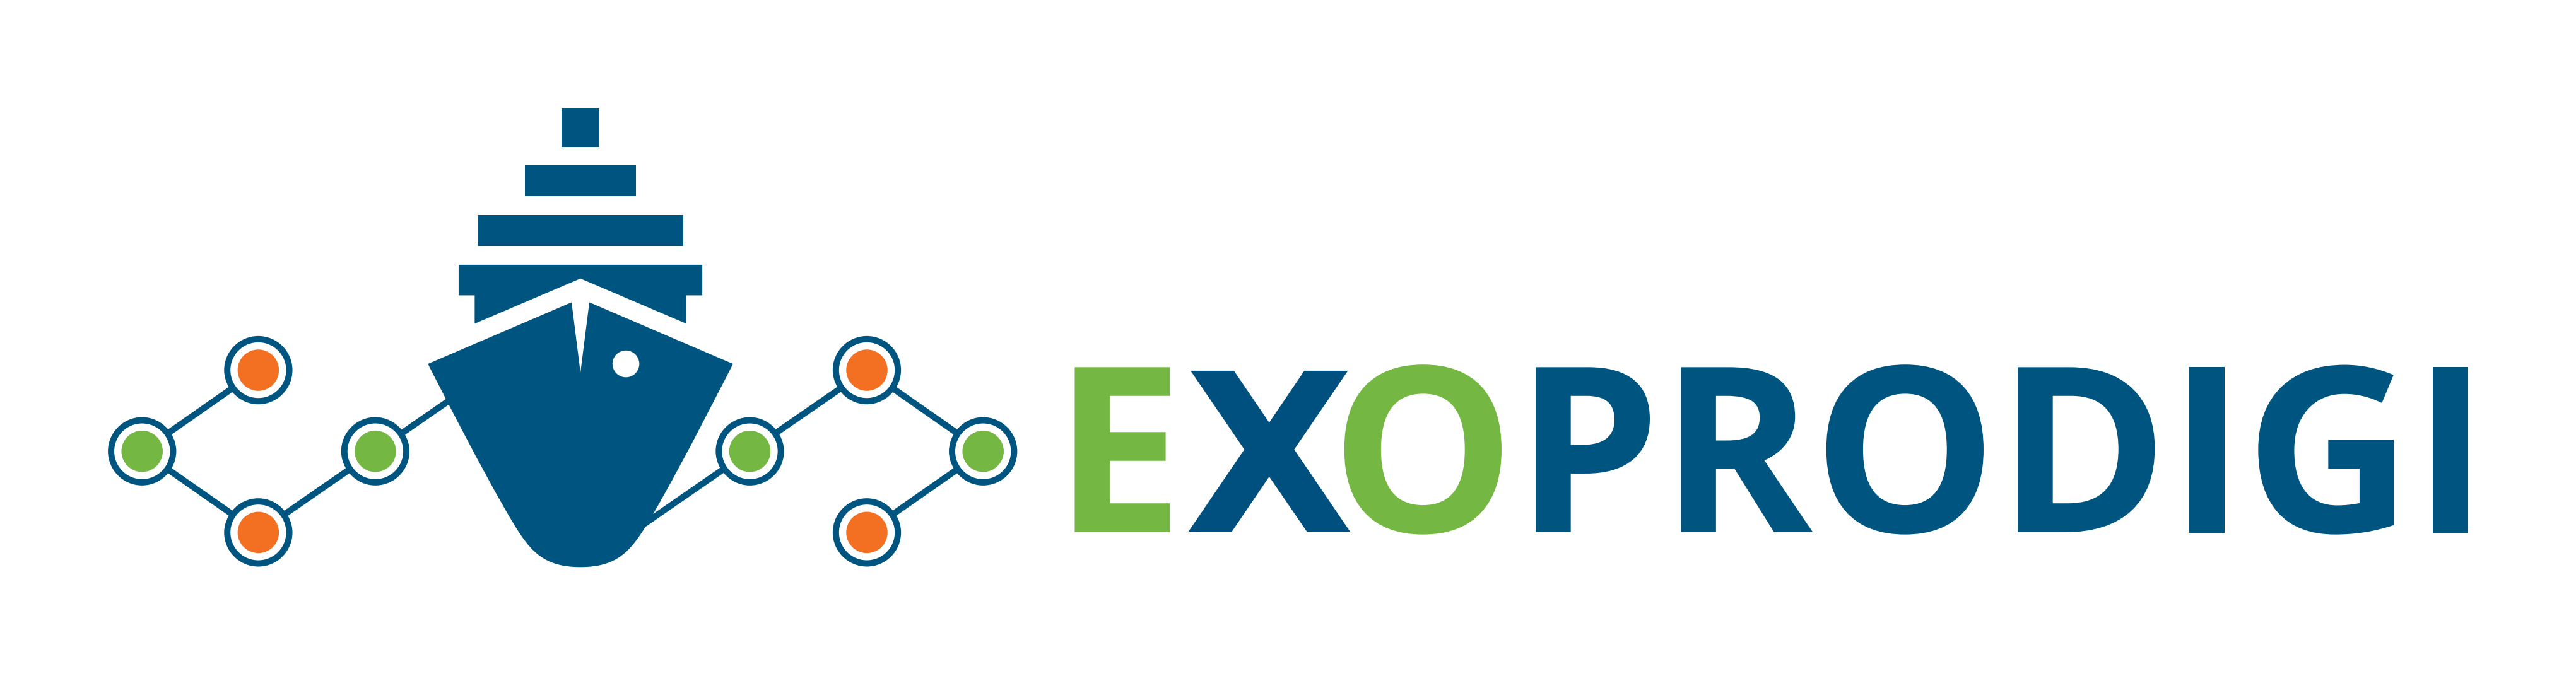 EXOPRODIGI-hankkeen logo